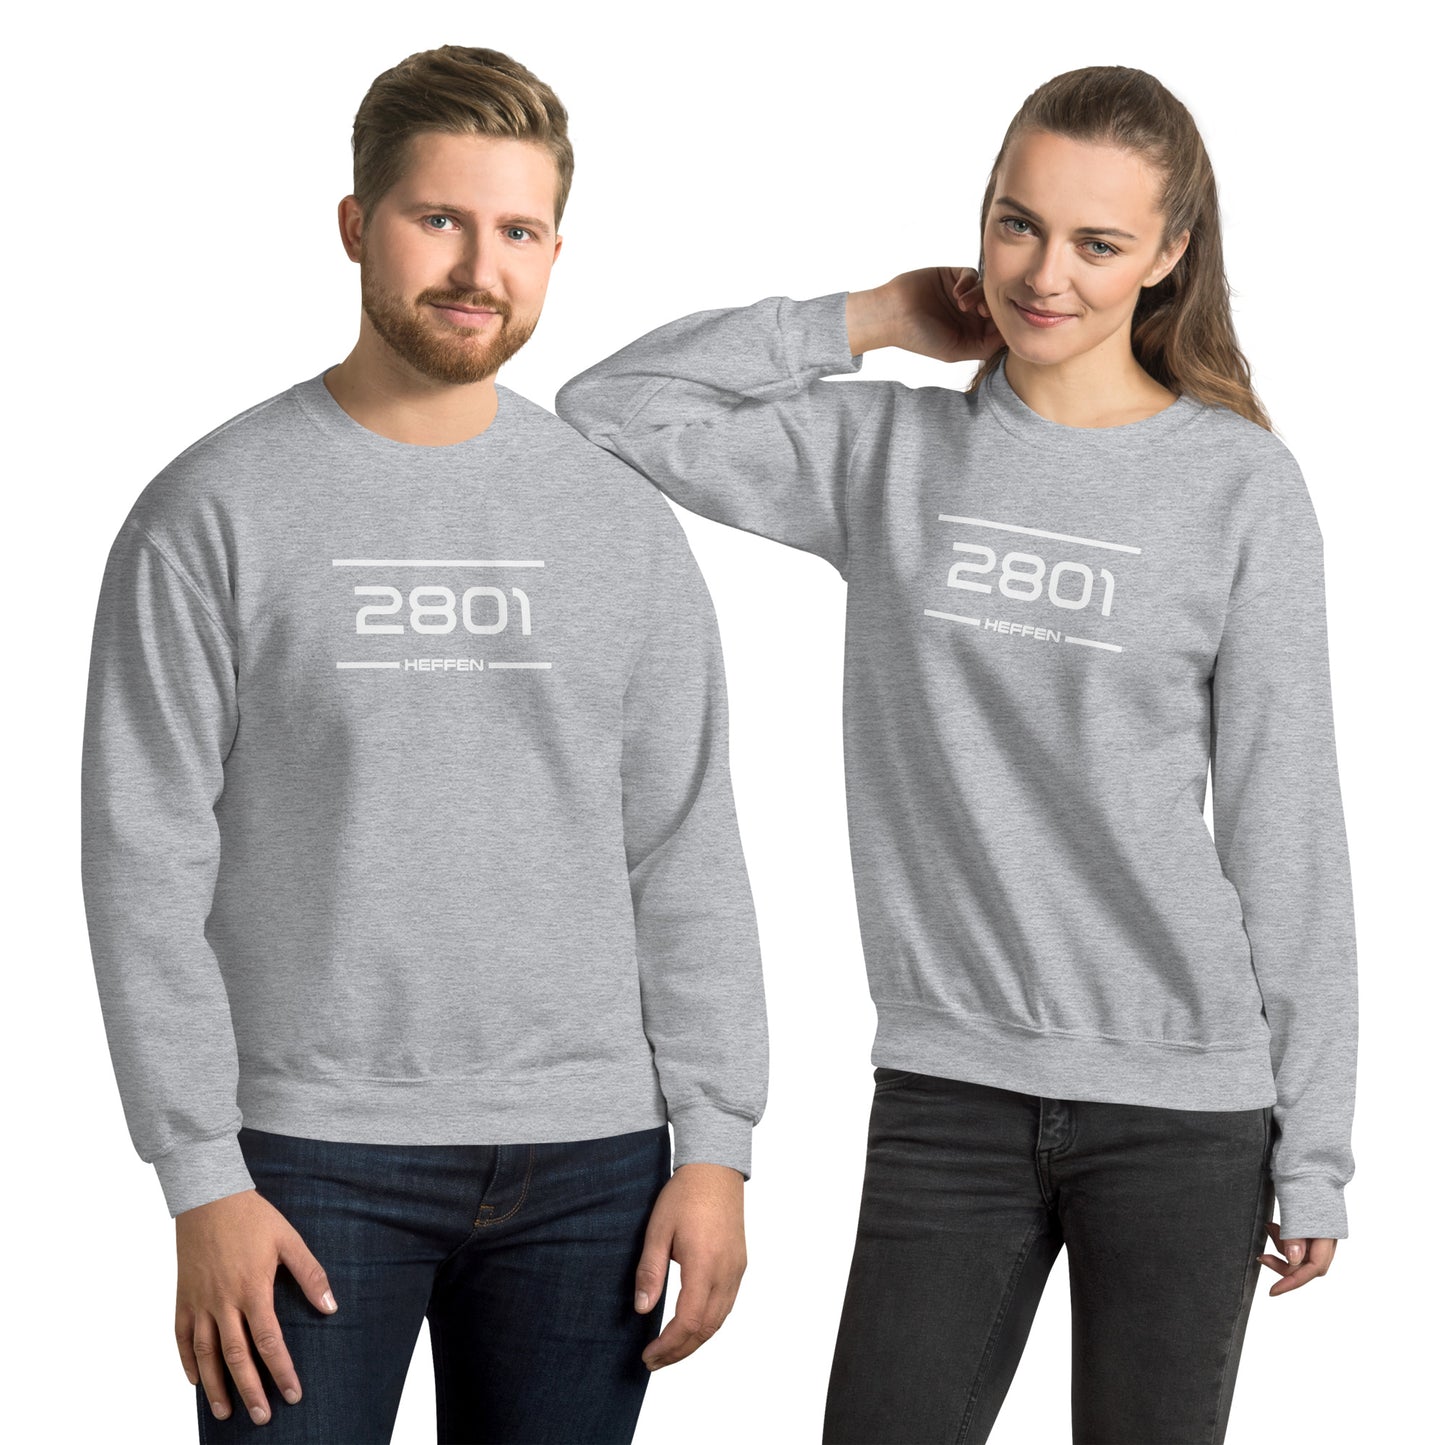 Sweater - 2801 - Heffen (M/V)